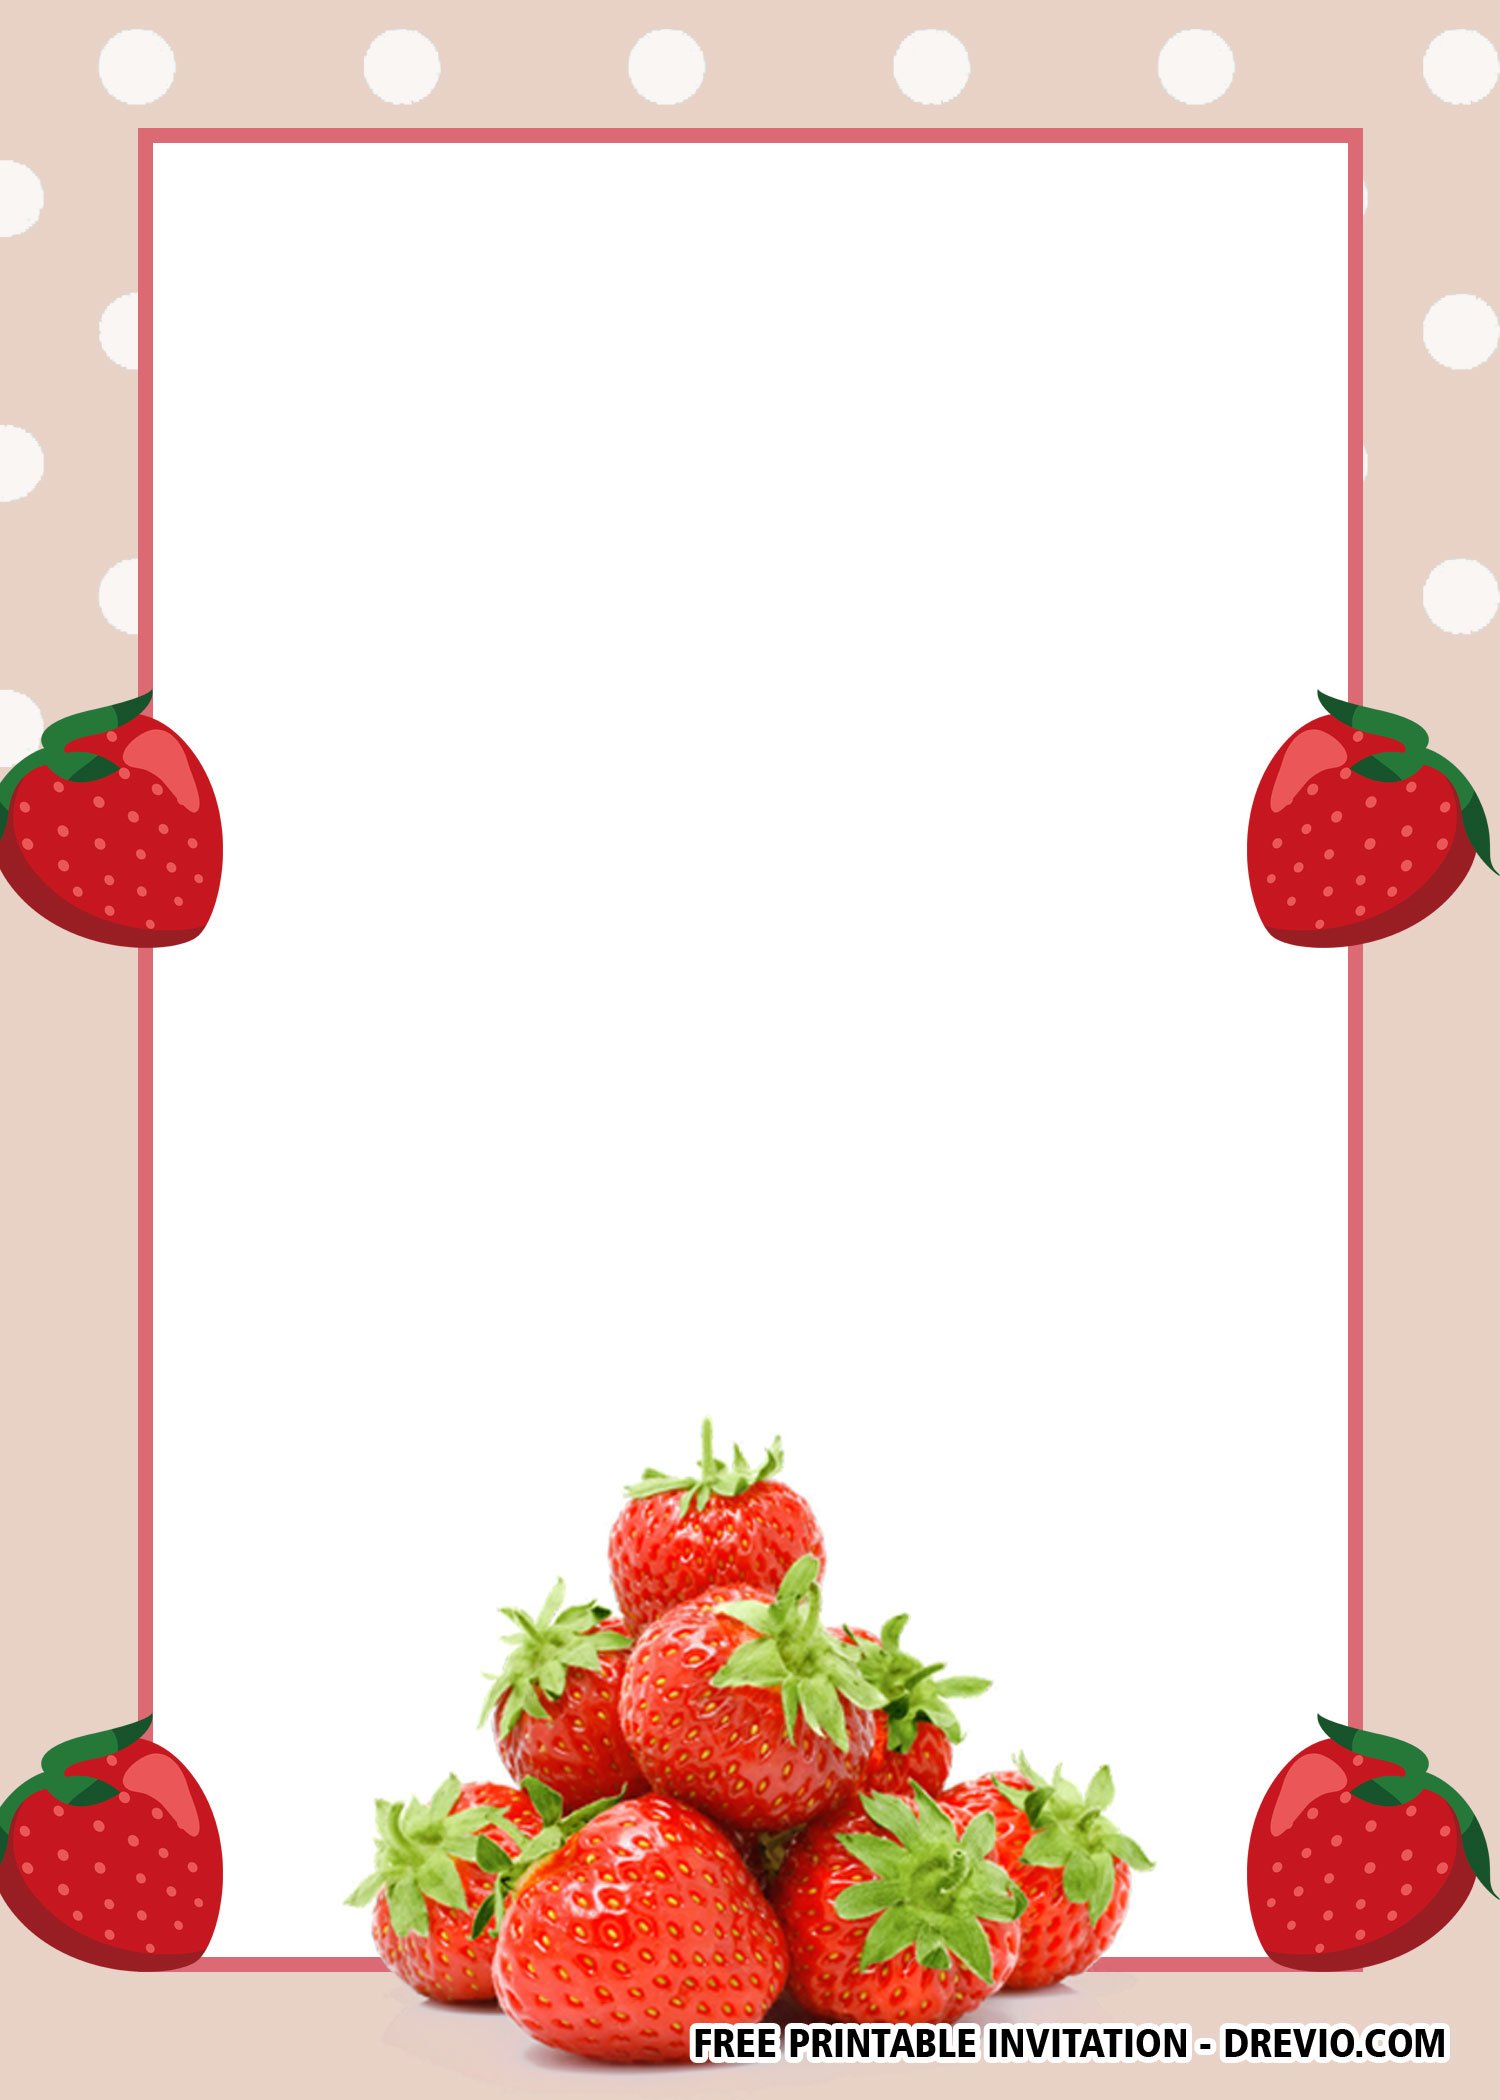 FREE Printable Strawberry Invitation Templates Download Hundreds FREE